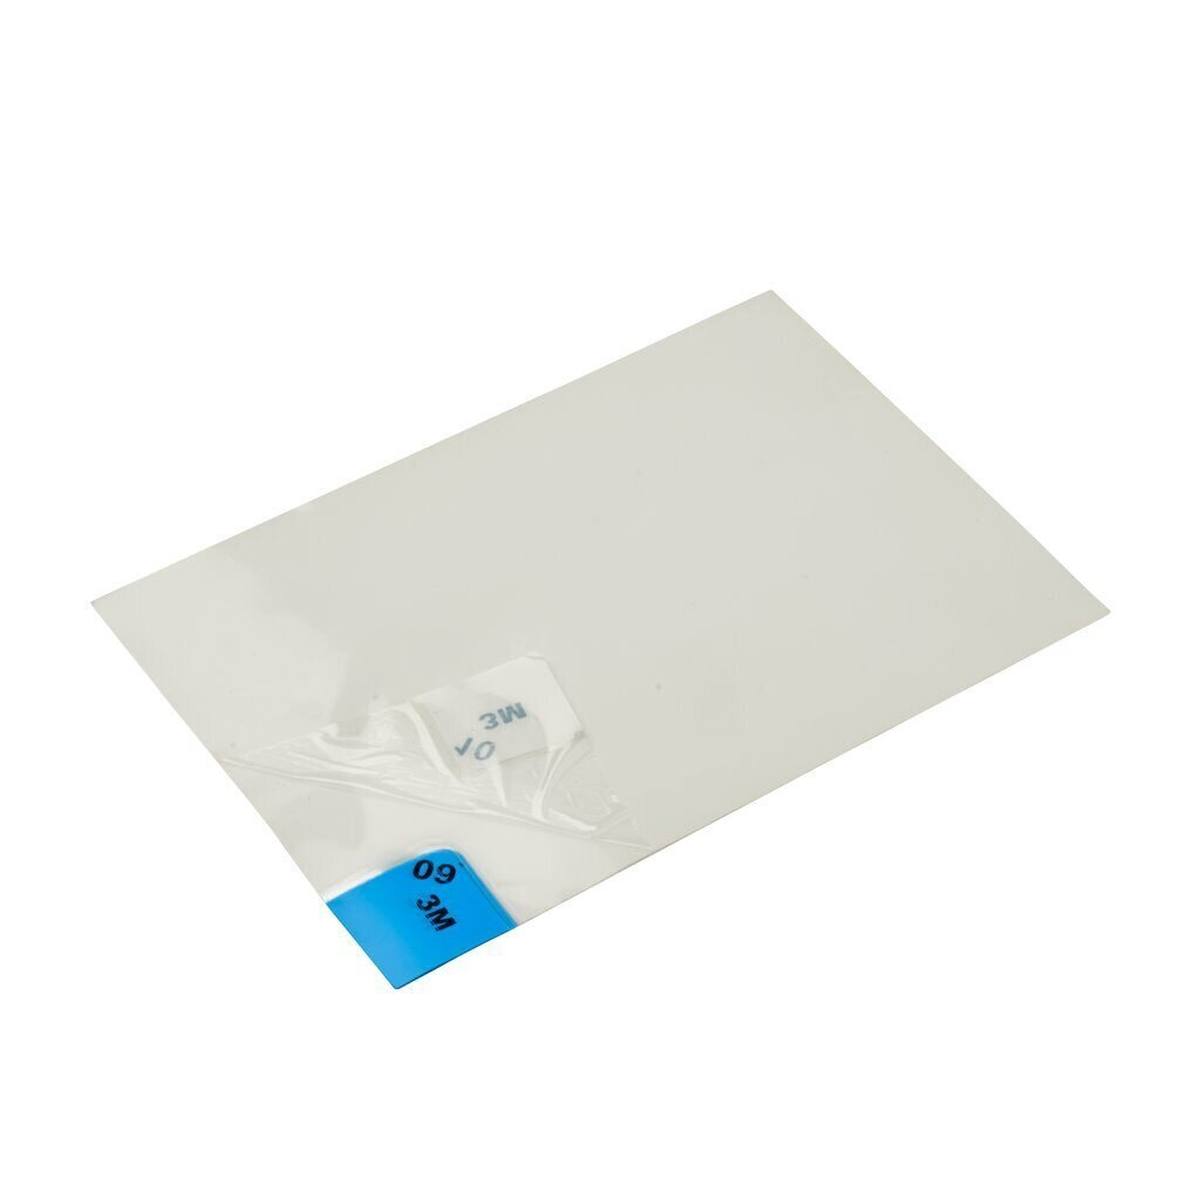 3M 4300 Nomad Tappetino adesivo per polveri sottili, bianco, 1,15m x 0,45m, 40pz strati di polietilene trasparente